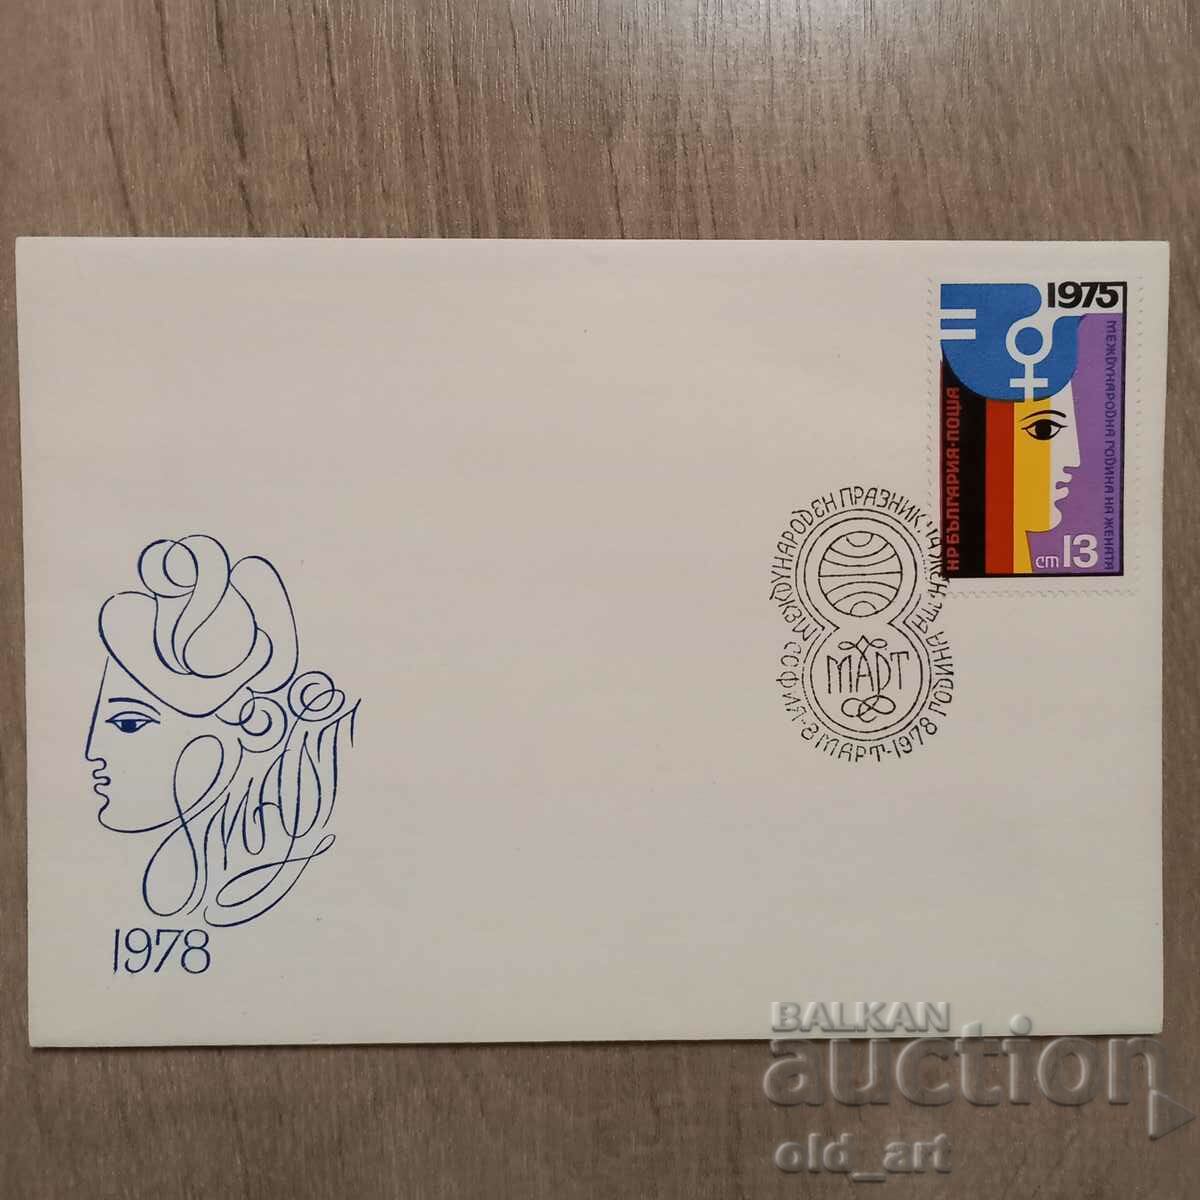 Postal envelope - March 8 Int. women's Day